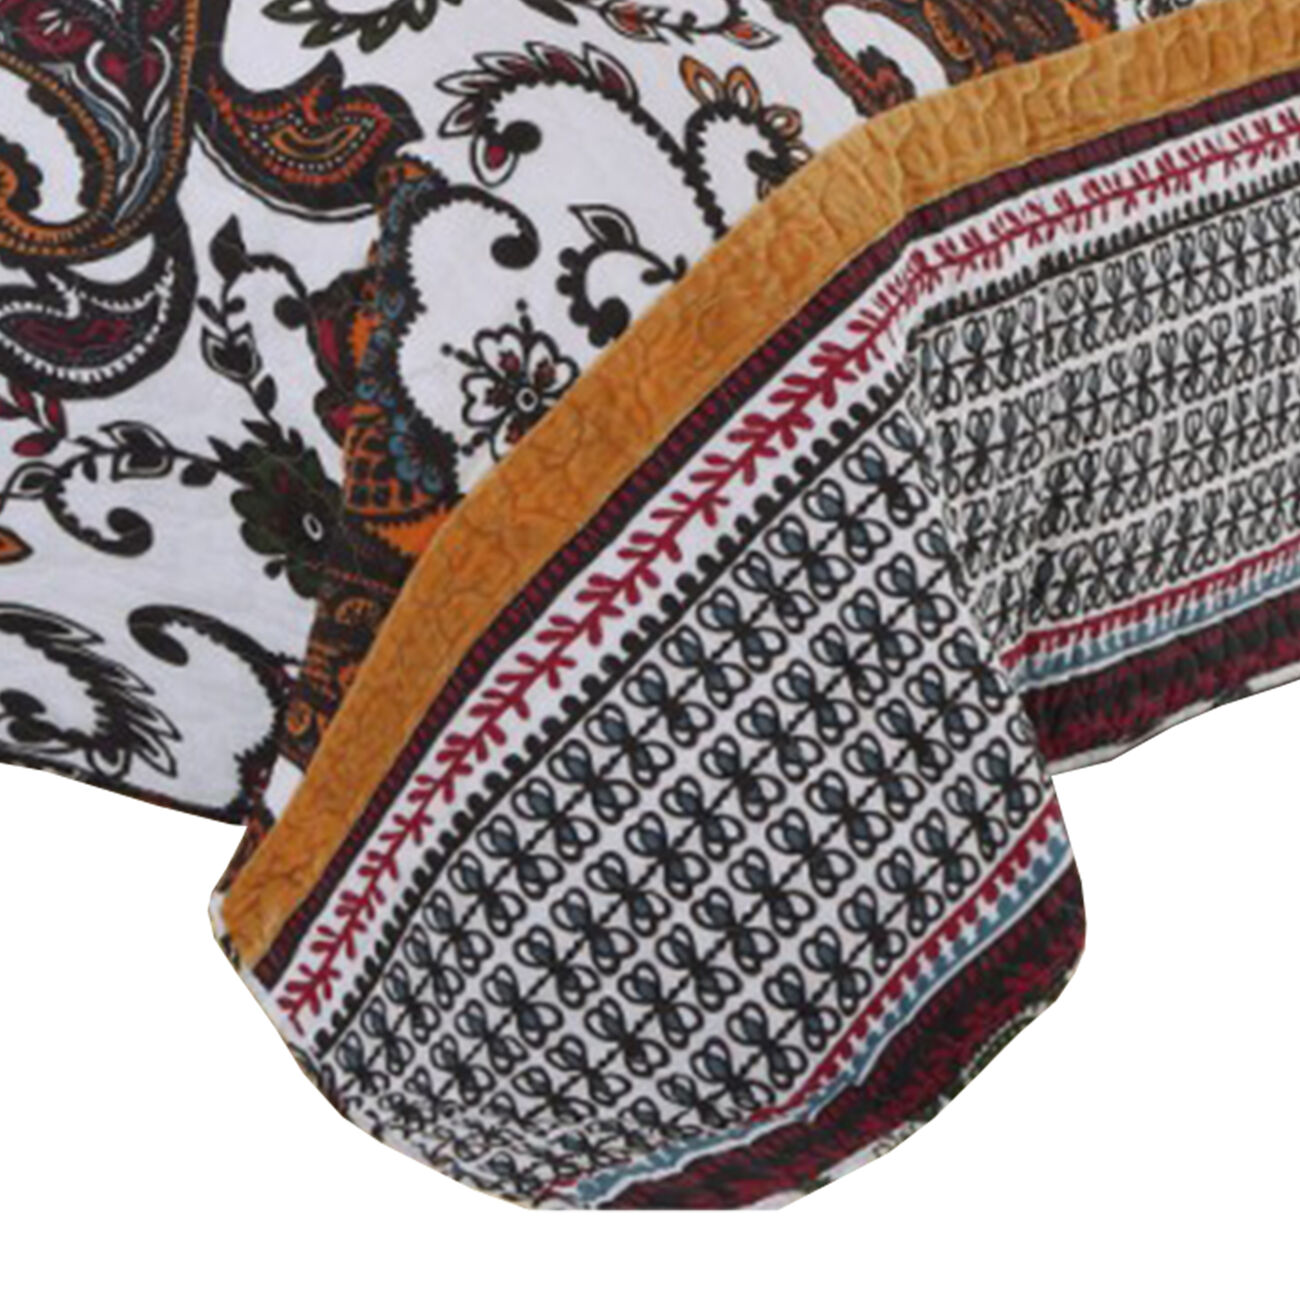 Detroit Fabric 3 Piece Queen Size Quilt Set with Tribal Motifs, Multicolor